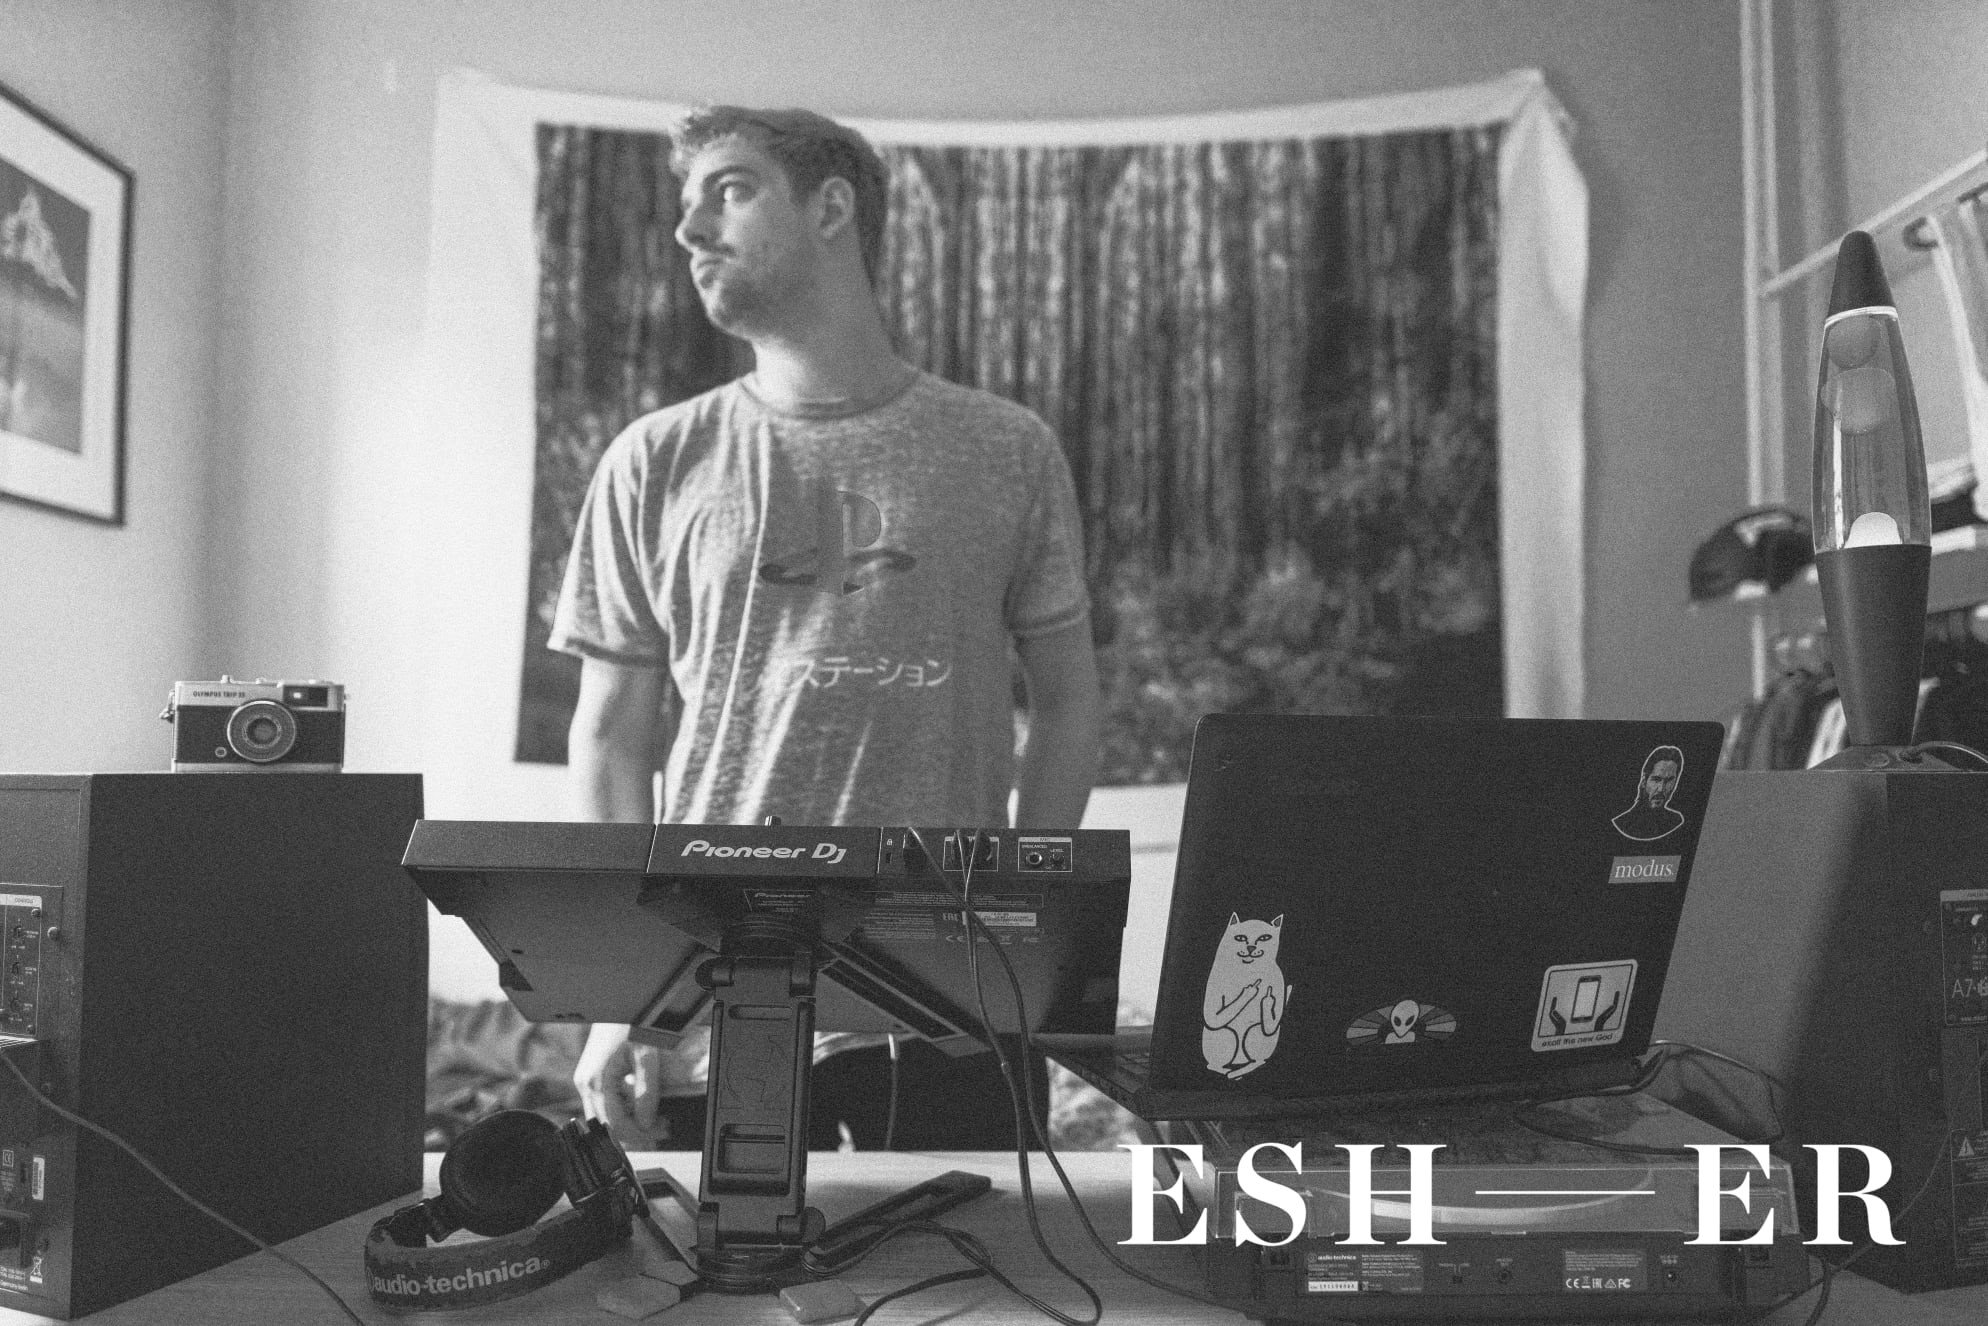 Esher starting 'Alternative Method' show this sunday with guest DJ Jangala.